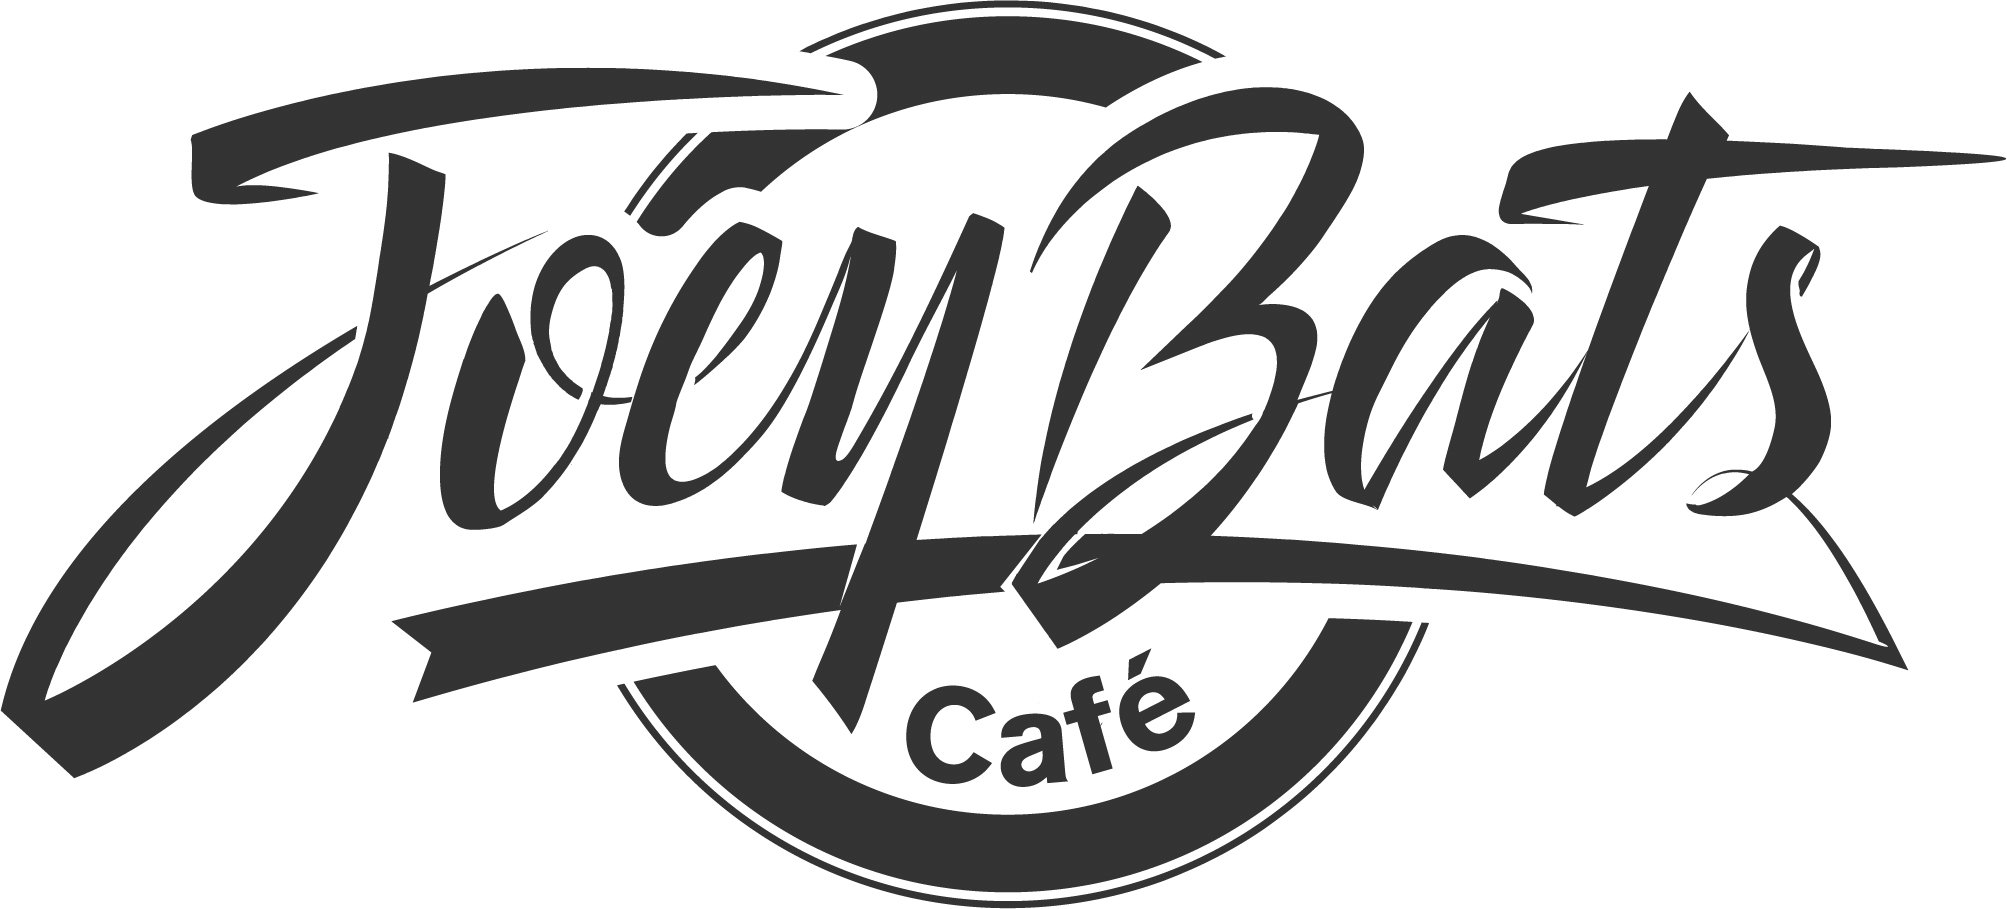 Joey Bats Cafe.jpg